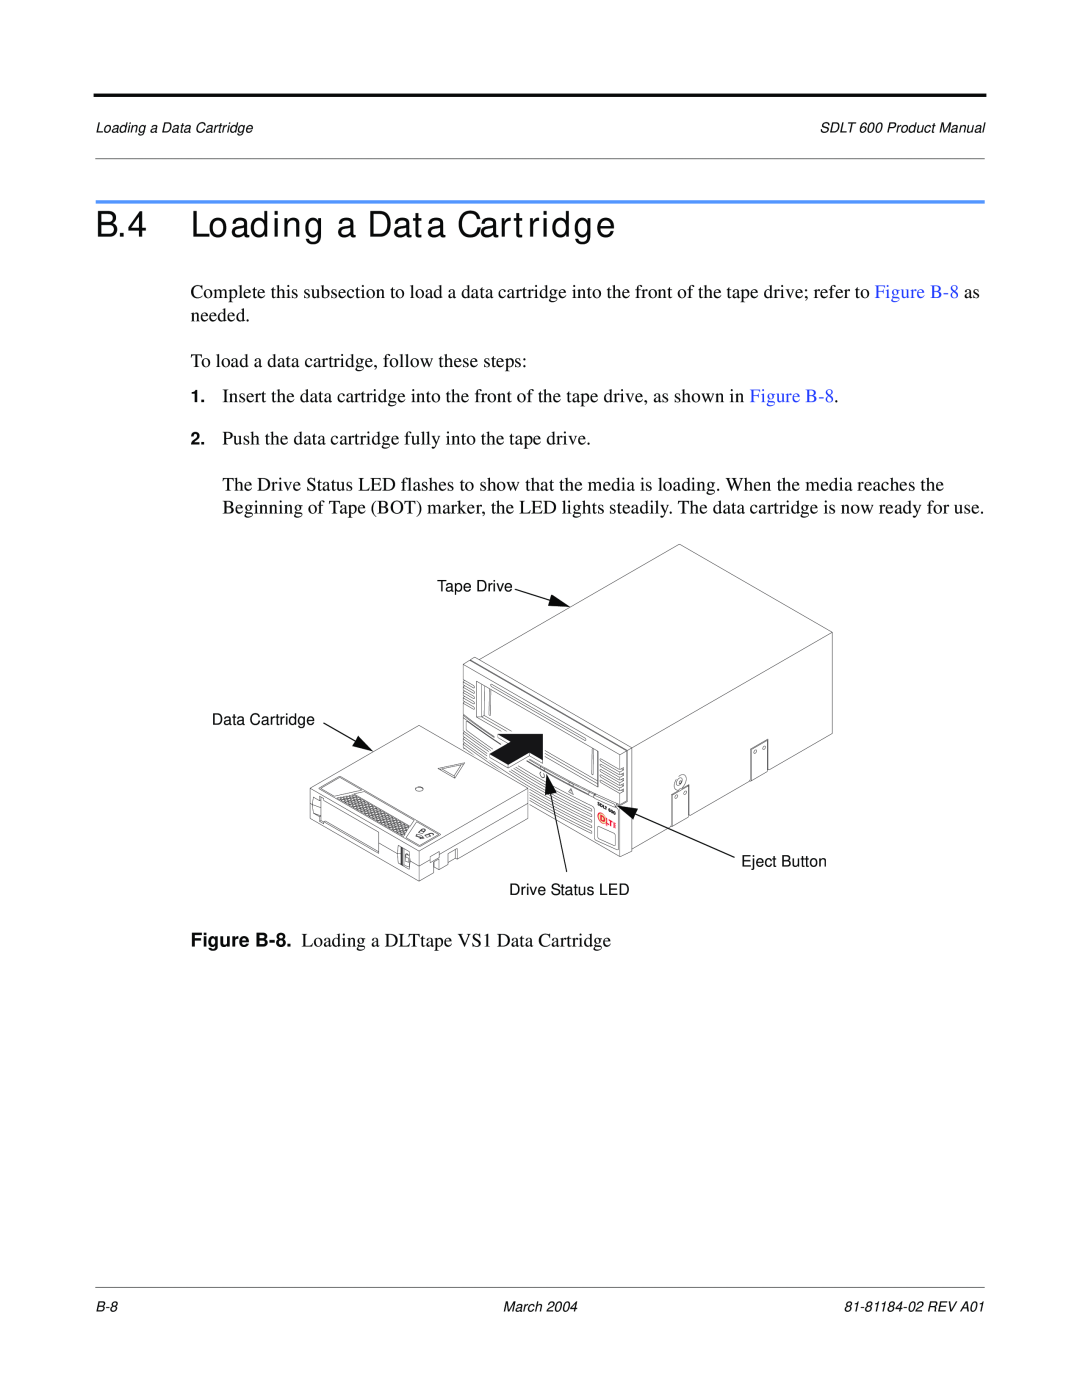 Tandberg Data 600 manual B.4 Loading a Data Cartridge 